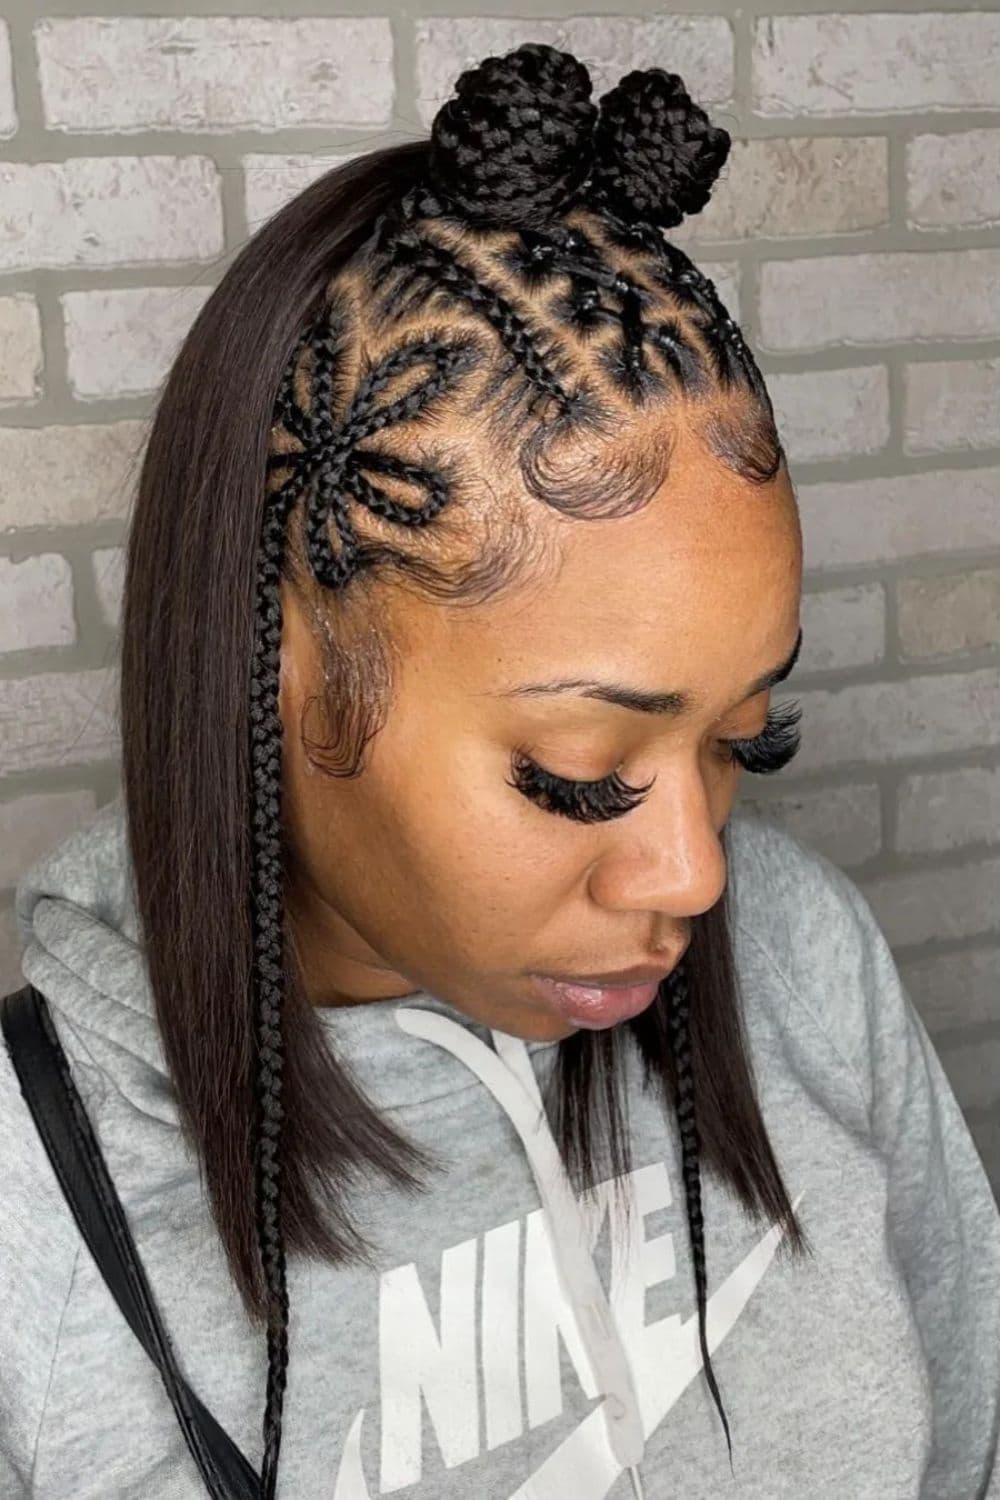 A black woman with a short half-up braid.